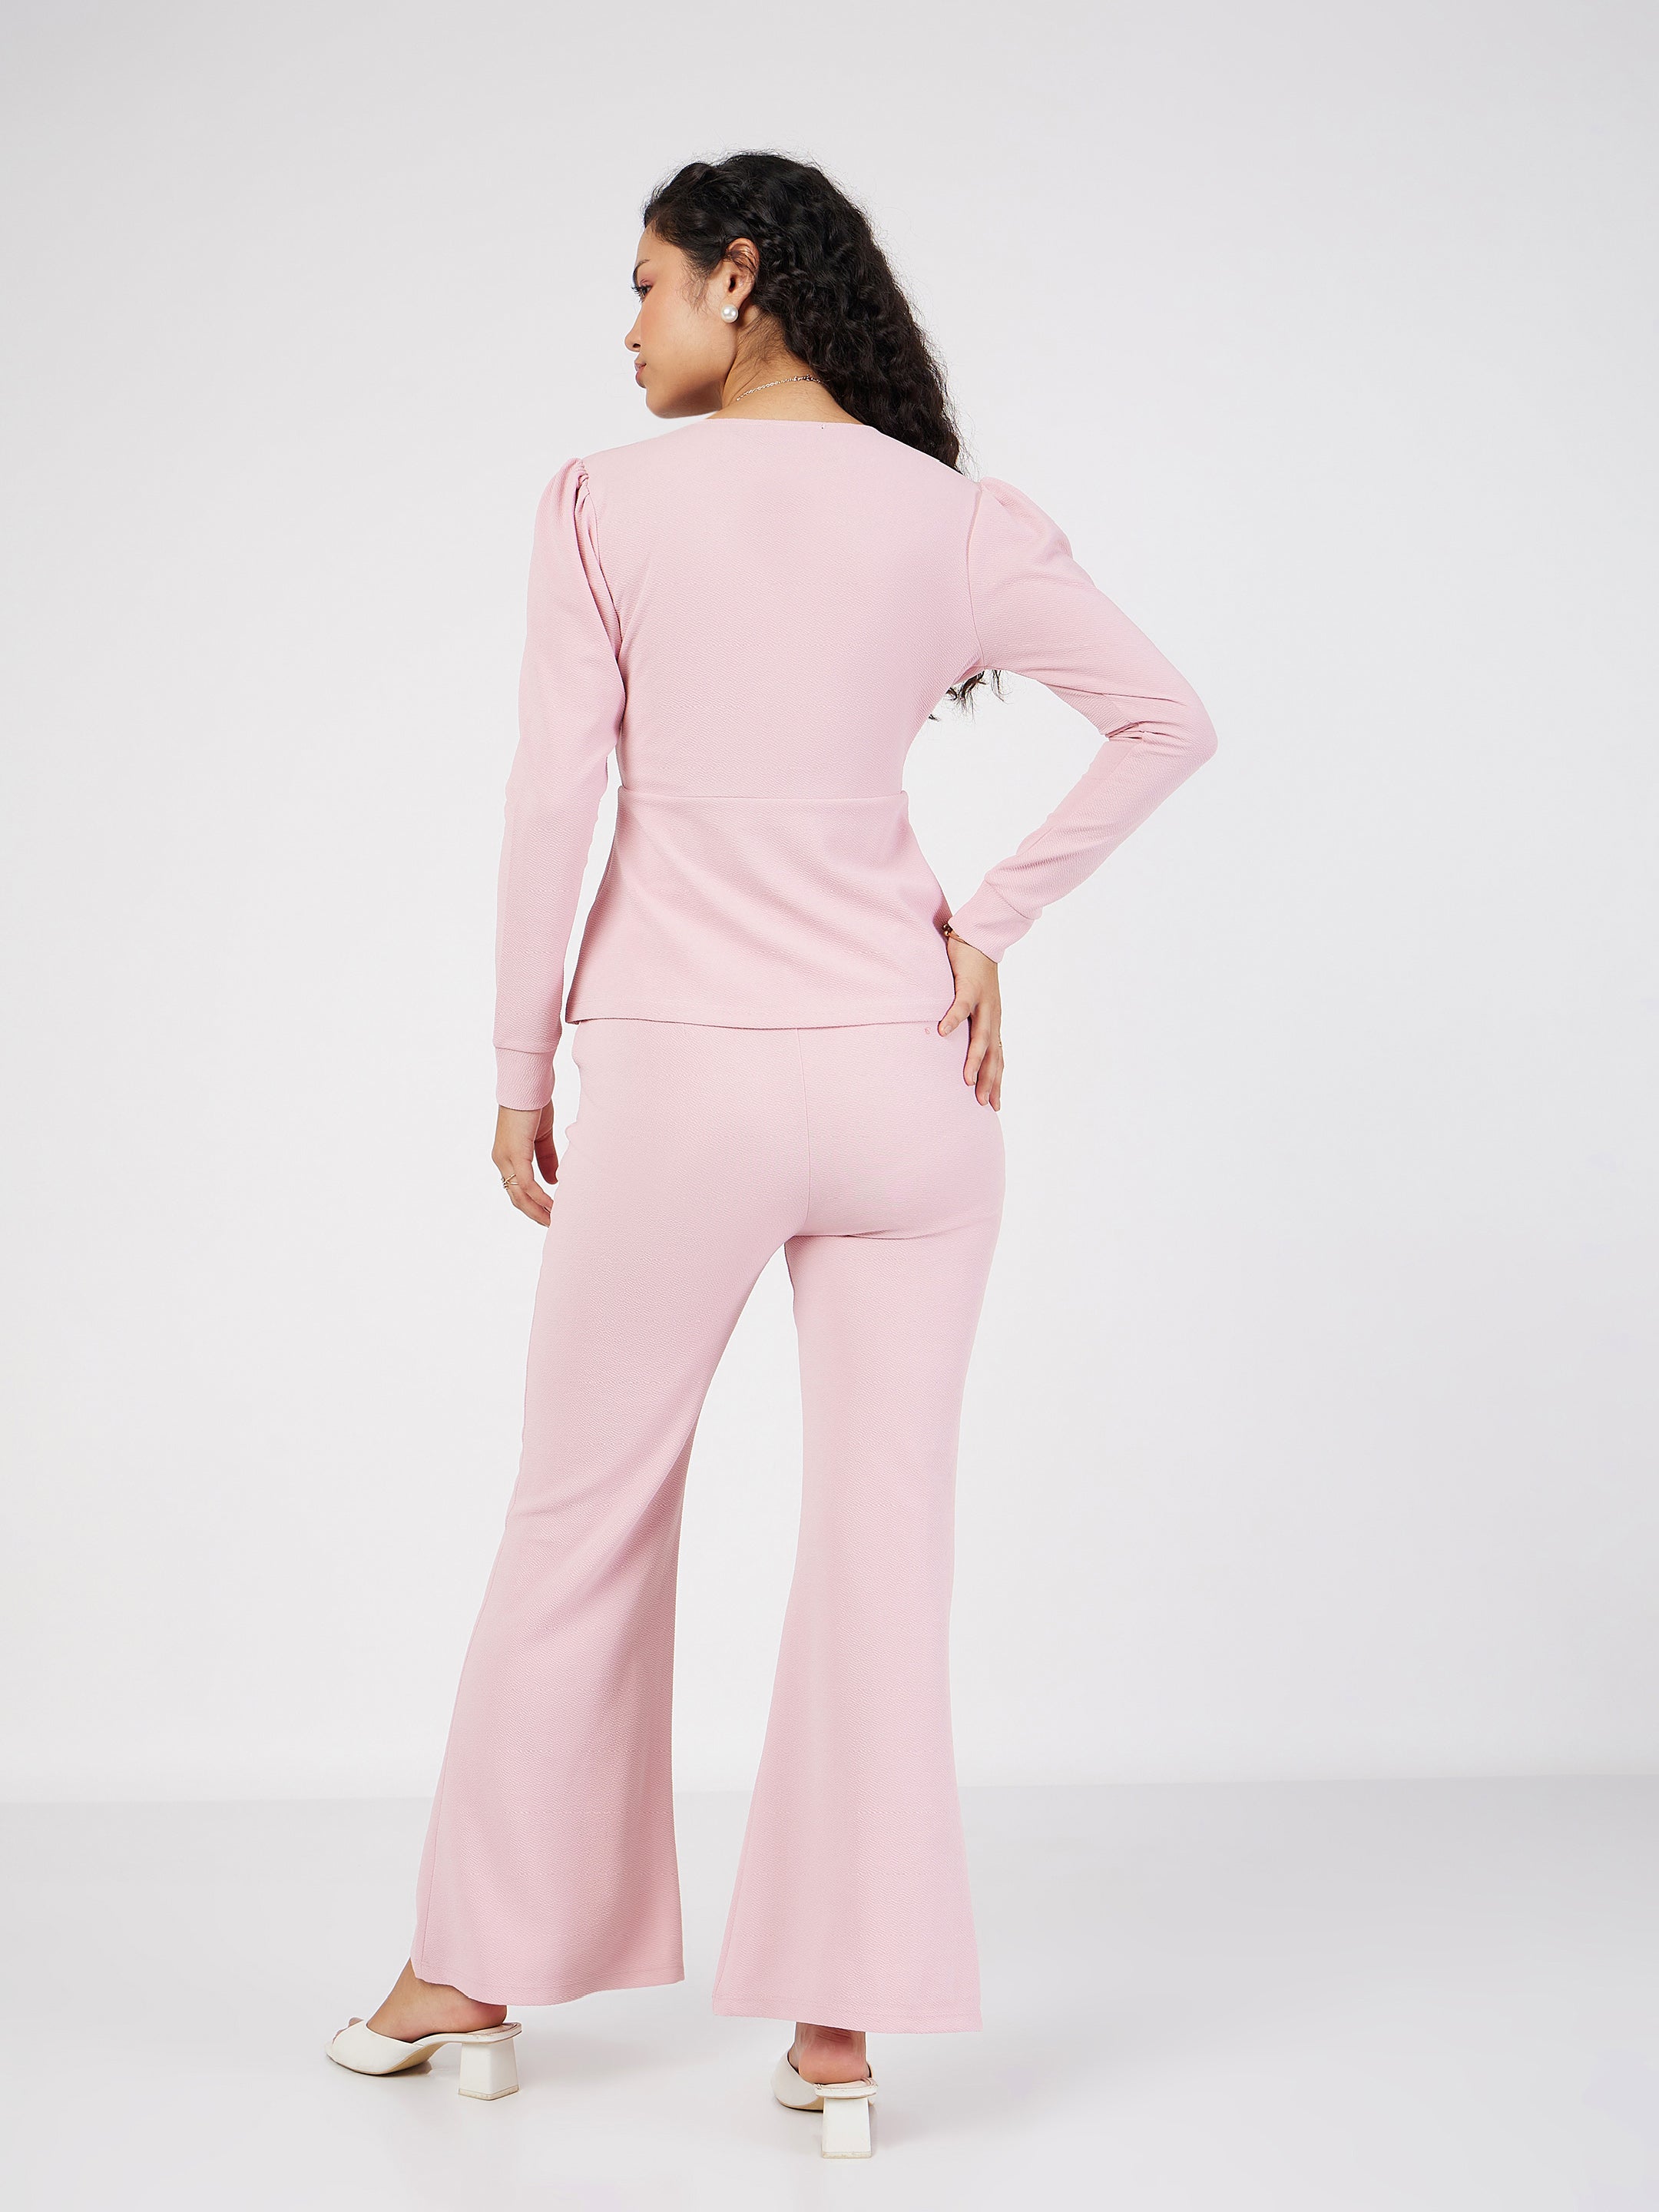 Women's Pink Wrap Peplum Top With Bellbottom Pants - Lyush